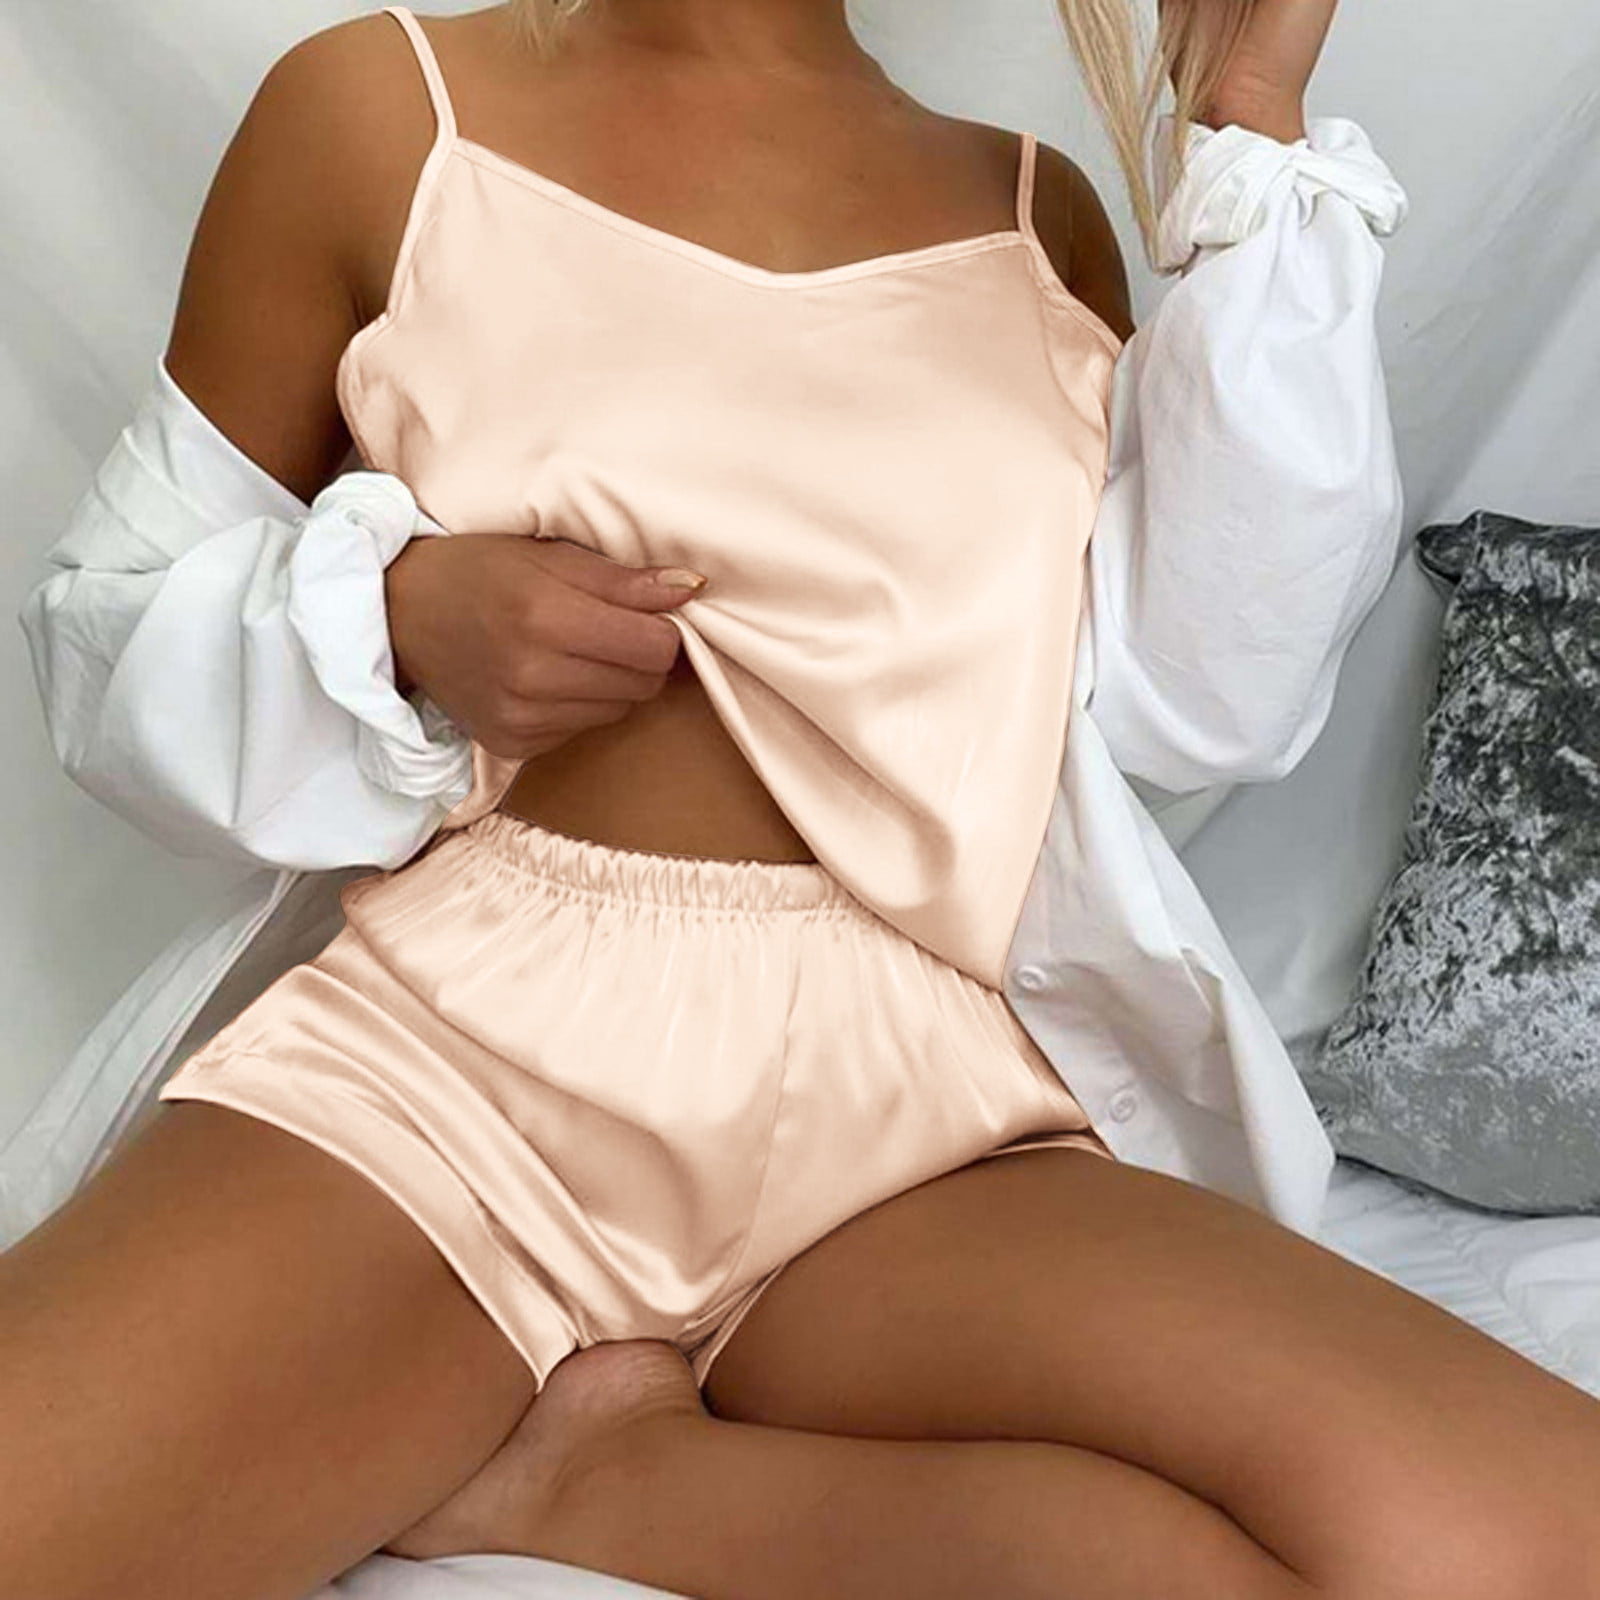 Women Satin Silk Pyjamas Sets Lingerie Underwear Ladies Sleepwear Nightwear US 